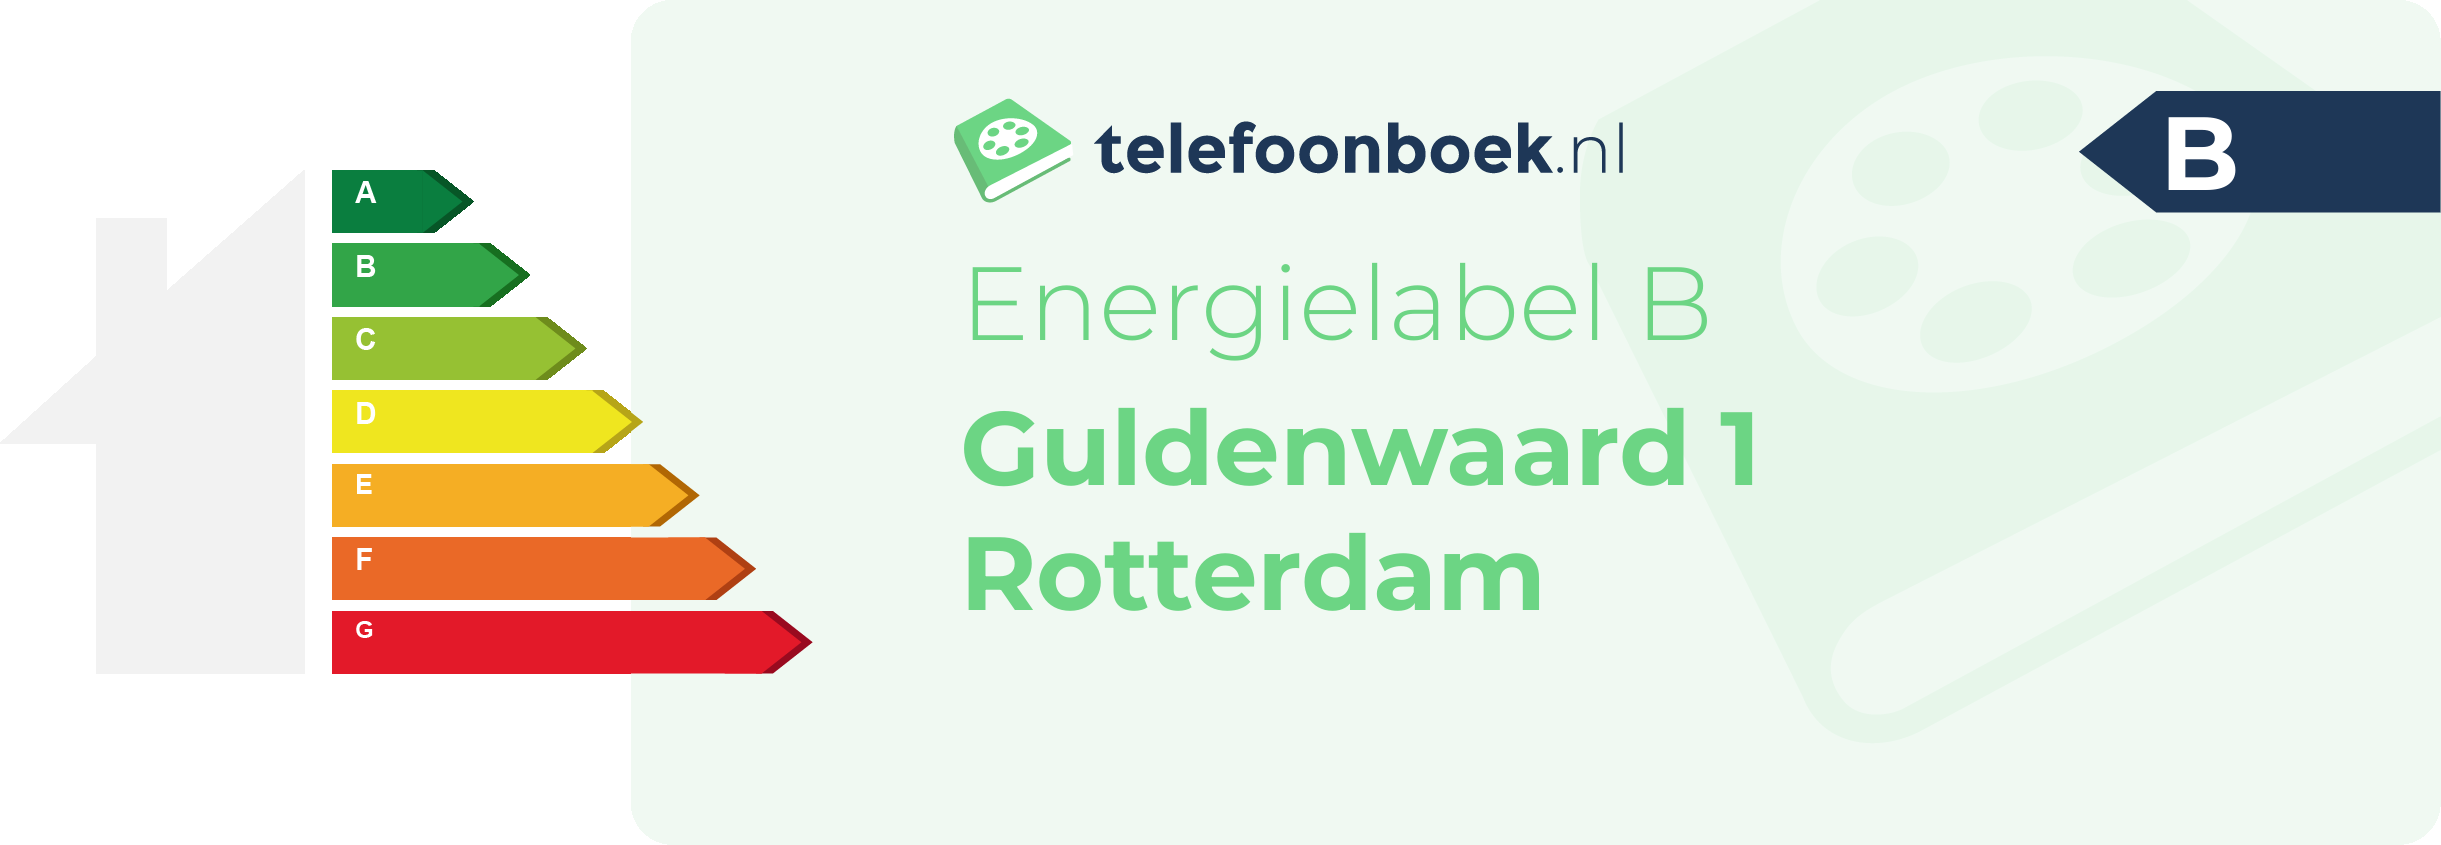 Energielabel Guldenwaard 1 Rotterdam